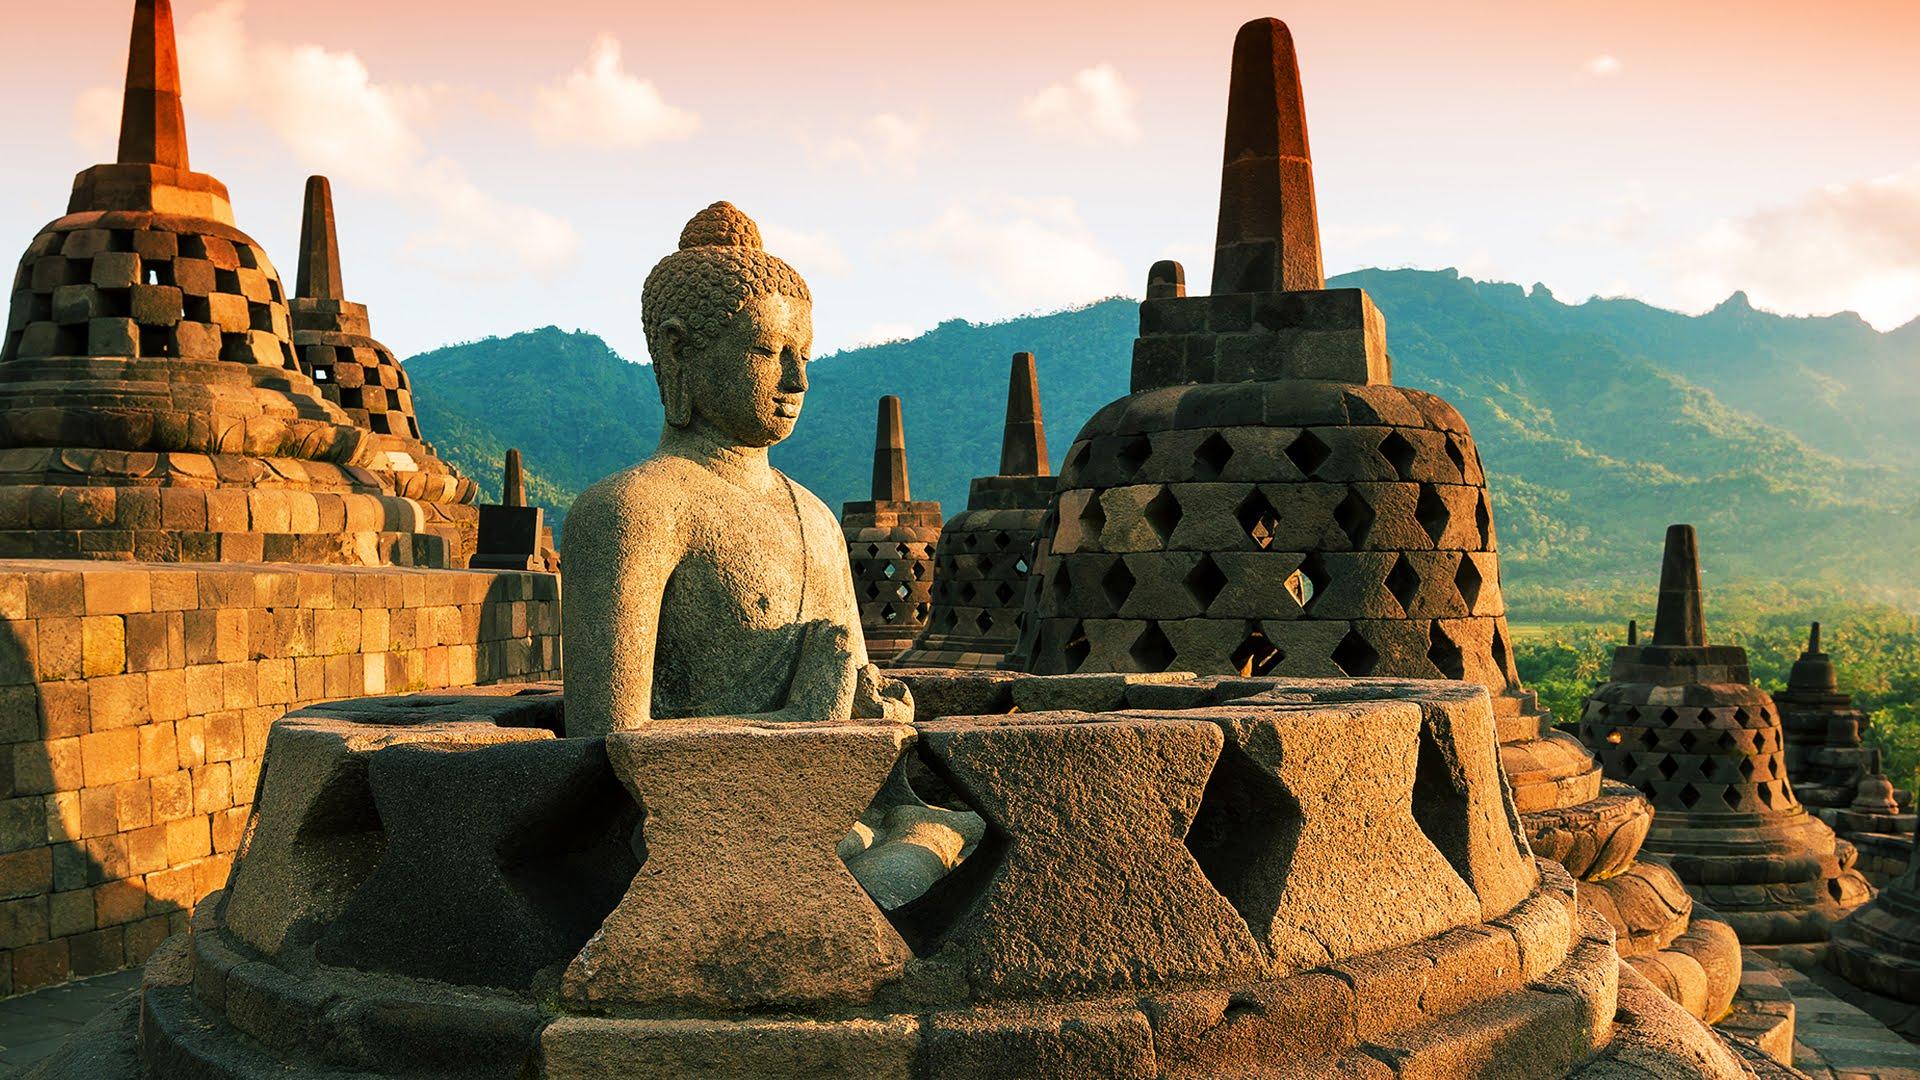 5D4N Yogyakarta Tour Package + Borobudur + solo Asia Travels